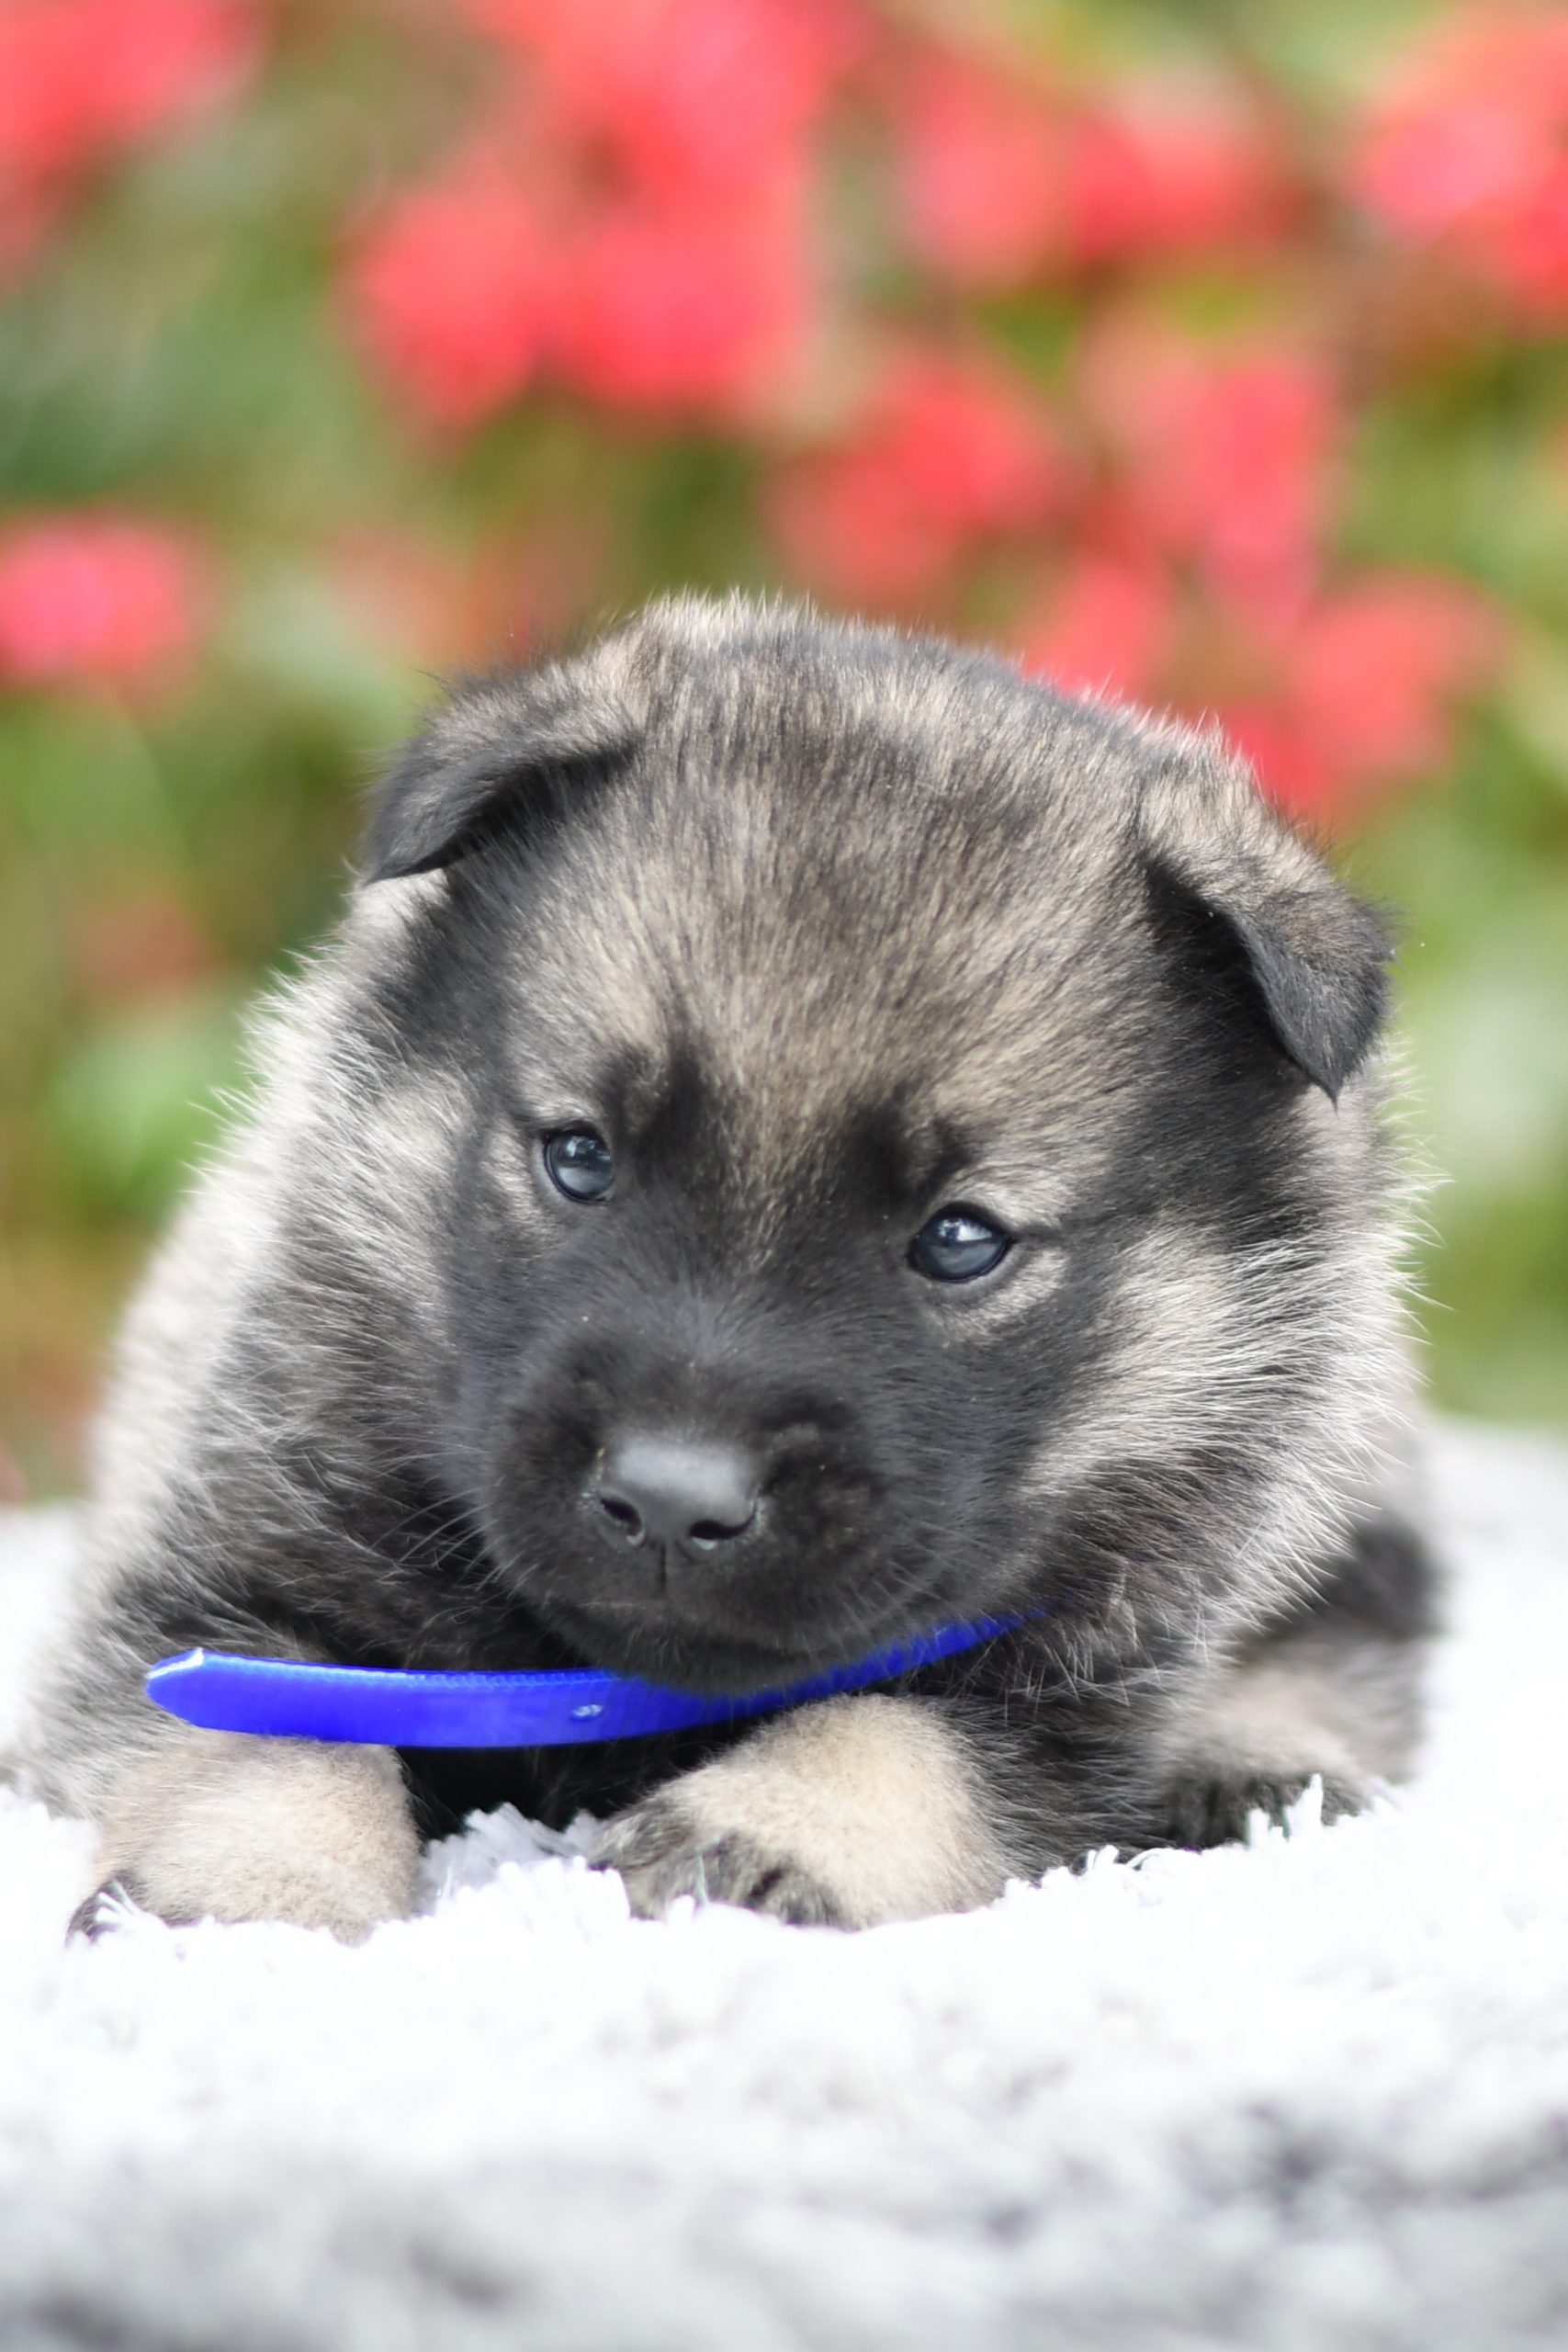 Norwegian Elkhound - Samson - All Star Puppies : All Star Puppies